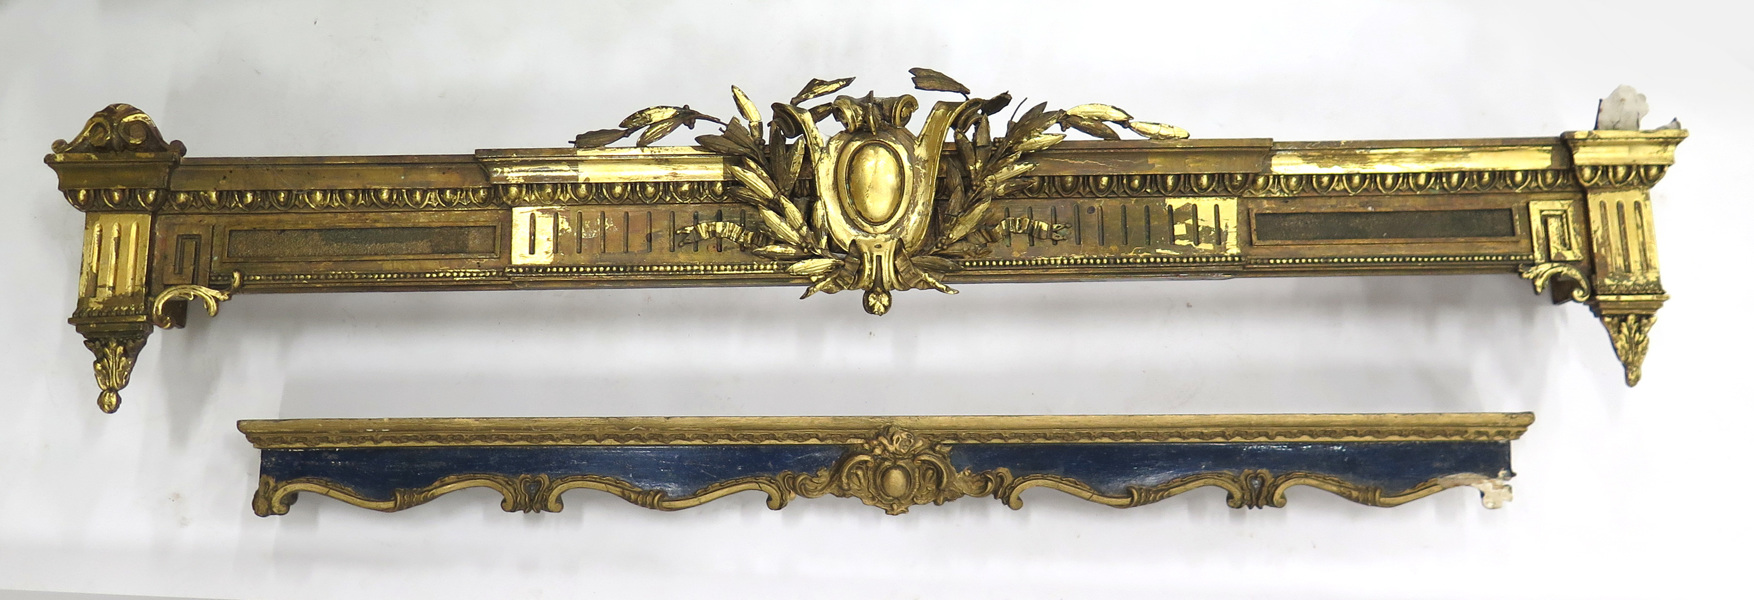 Kornischer, 2 st, förgyllt, bronserat och bemålat trä och stuck, Louis XVI-stil respektive nyrokoko, _14891a_8d9b037d755a579_lg.jpeg